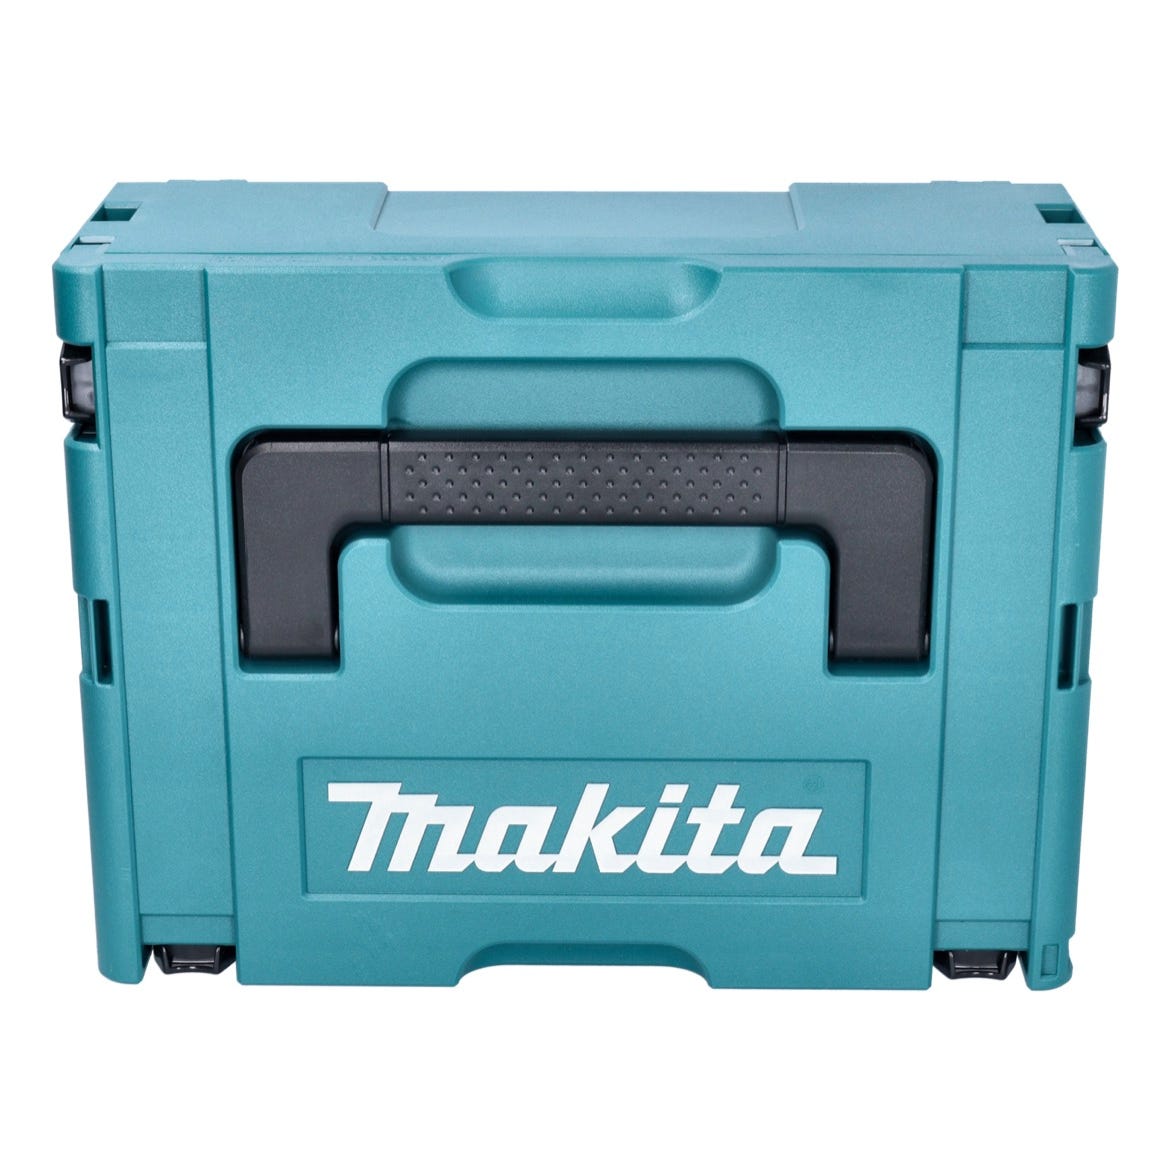 Makita DHP 489 RG1J Perceuse-visseuse à percussion sans fil 18 V 73 Nm Brushless + 1x batterie 6,0 Ah + chargeur + Makpac 2